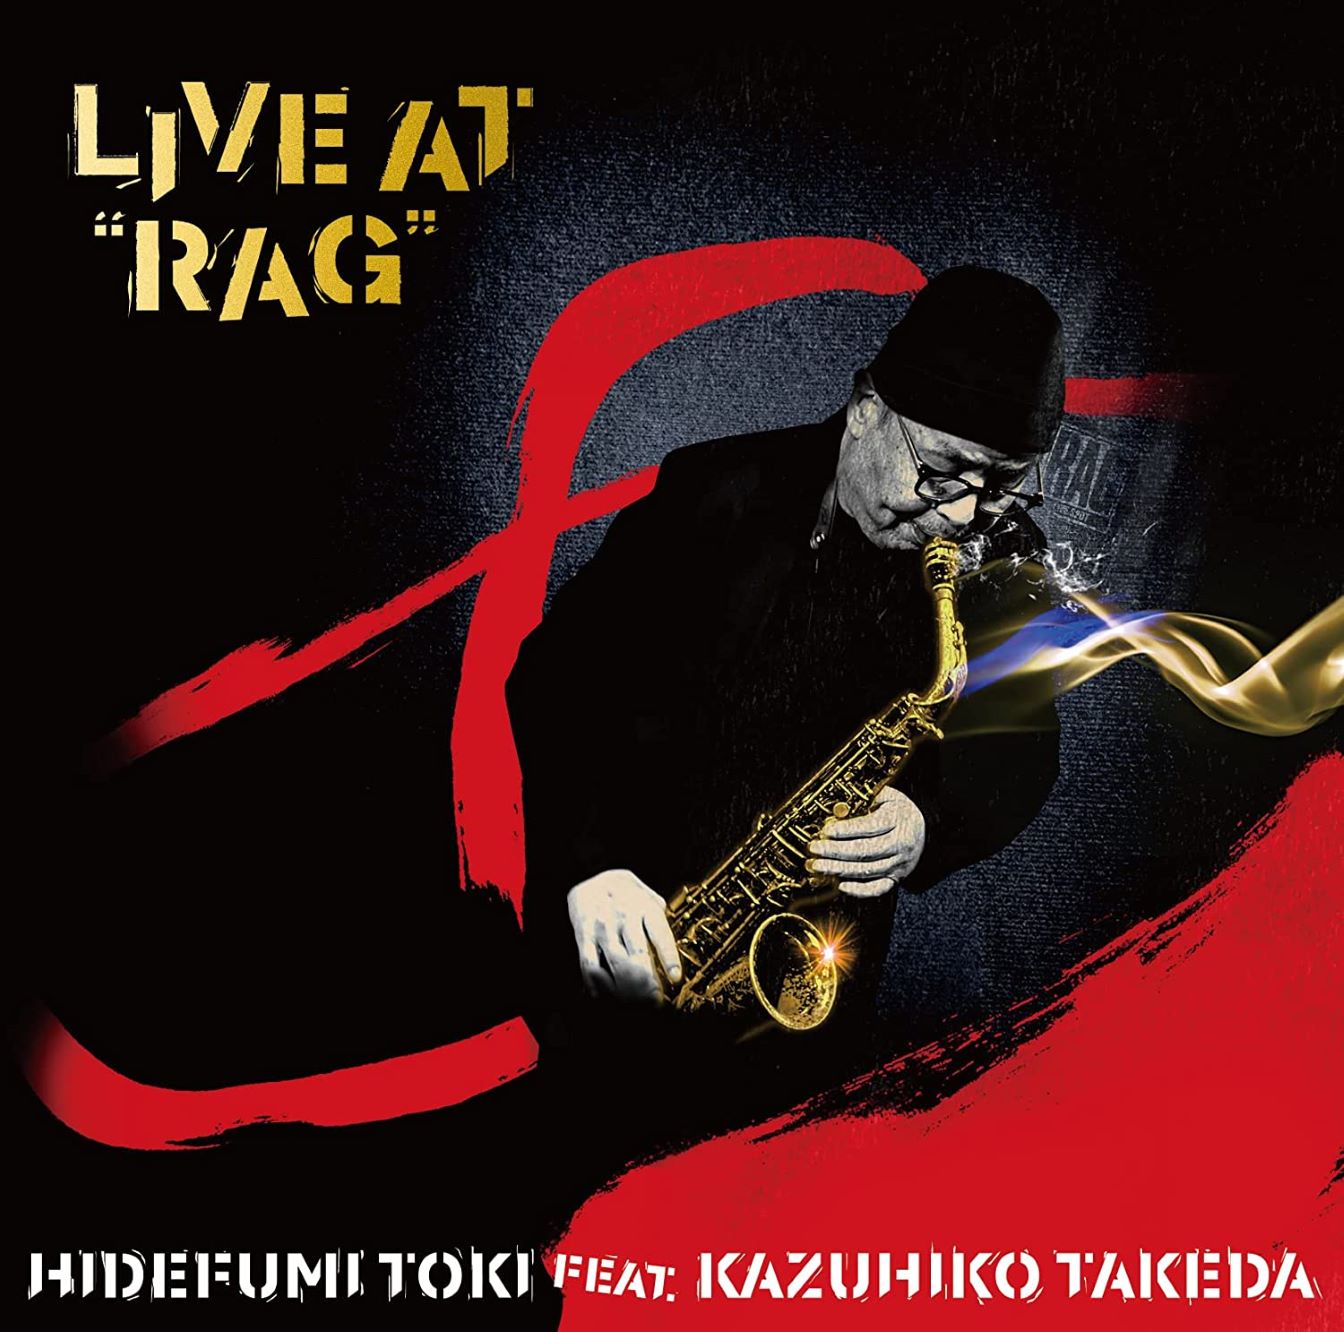 土岐 英史 feat. 竹田 一彦 / Live at "RAG"